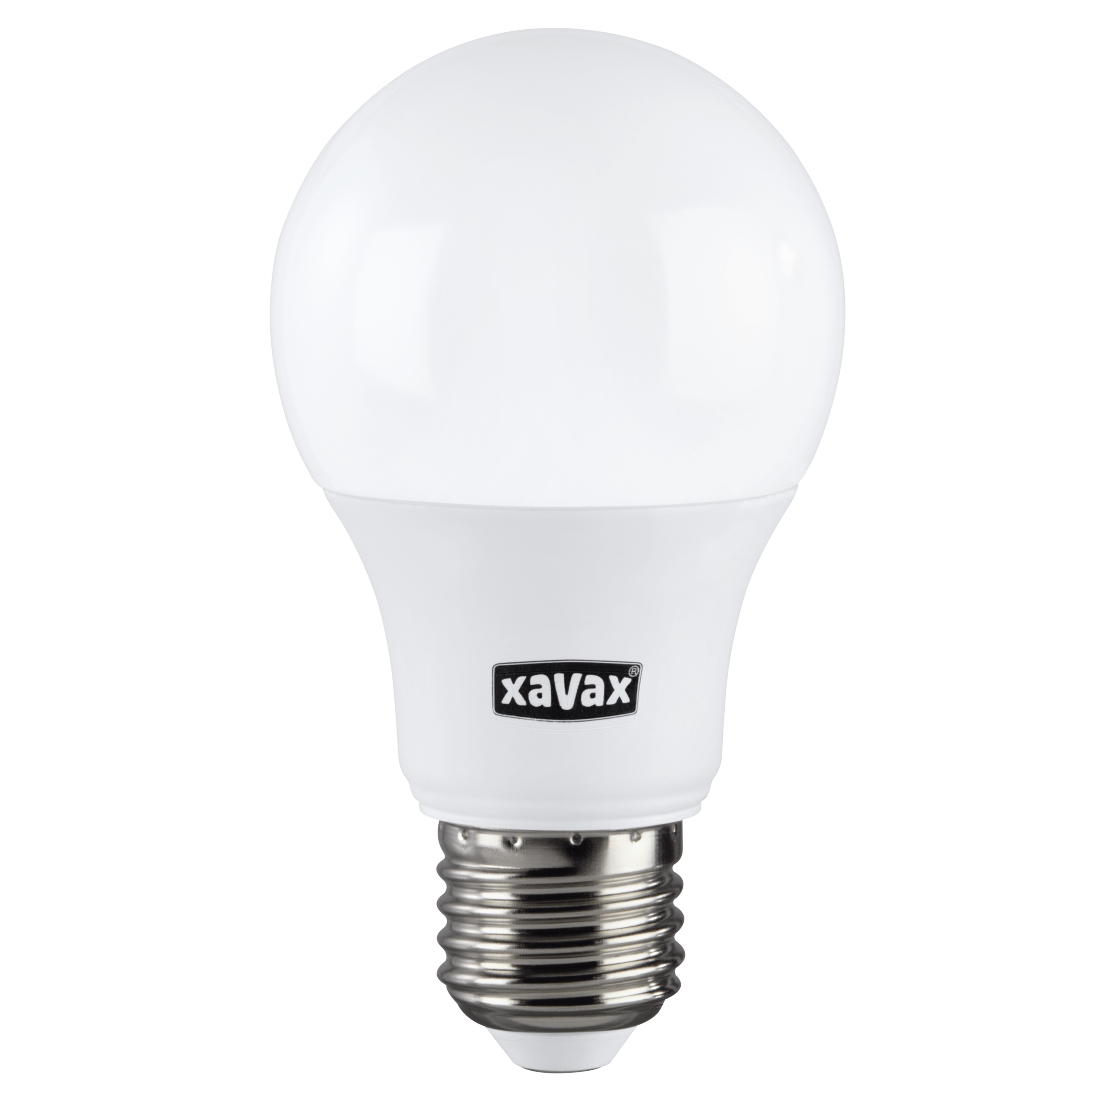 abx Druckfähige Abbildung - Xavax, LED-Lampe, E27, 806lm ersetzt 60W, Glühlampe, Warmweiß, dimmbar